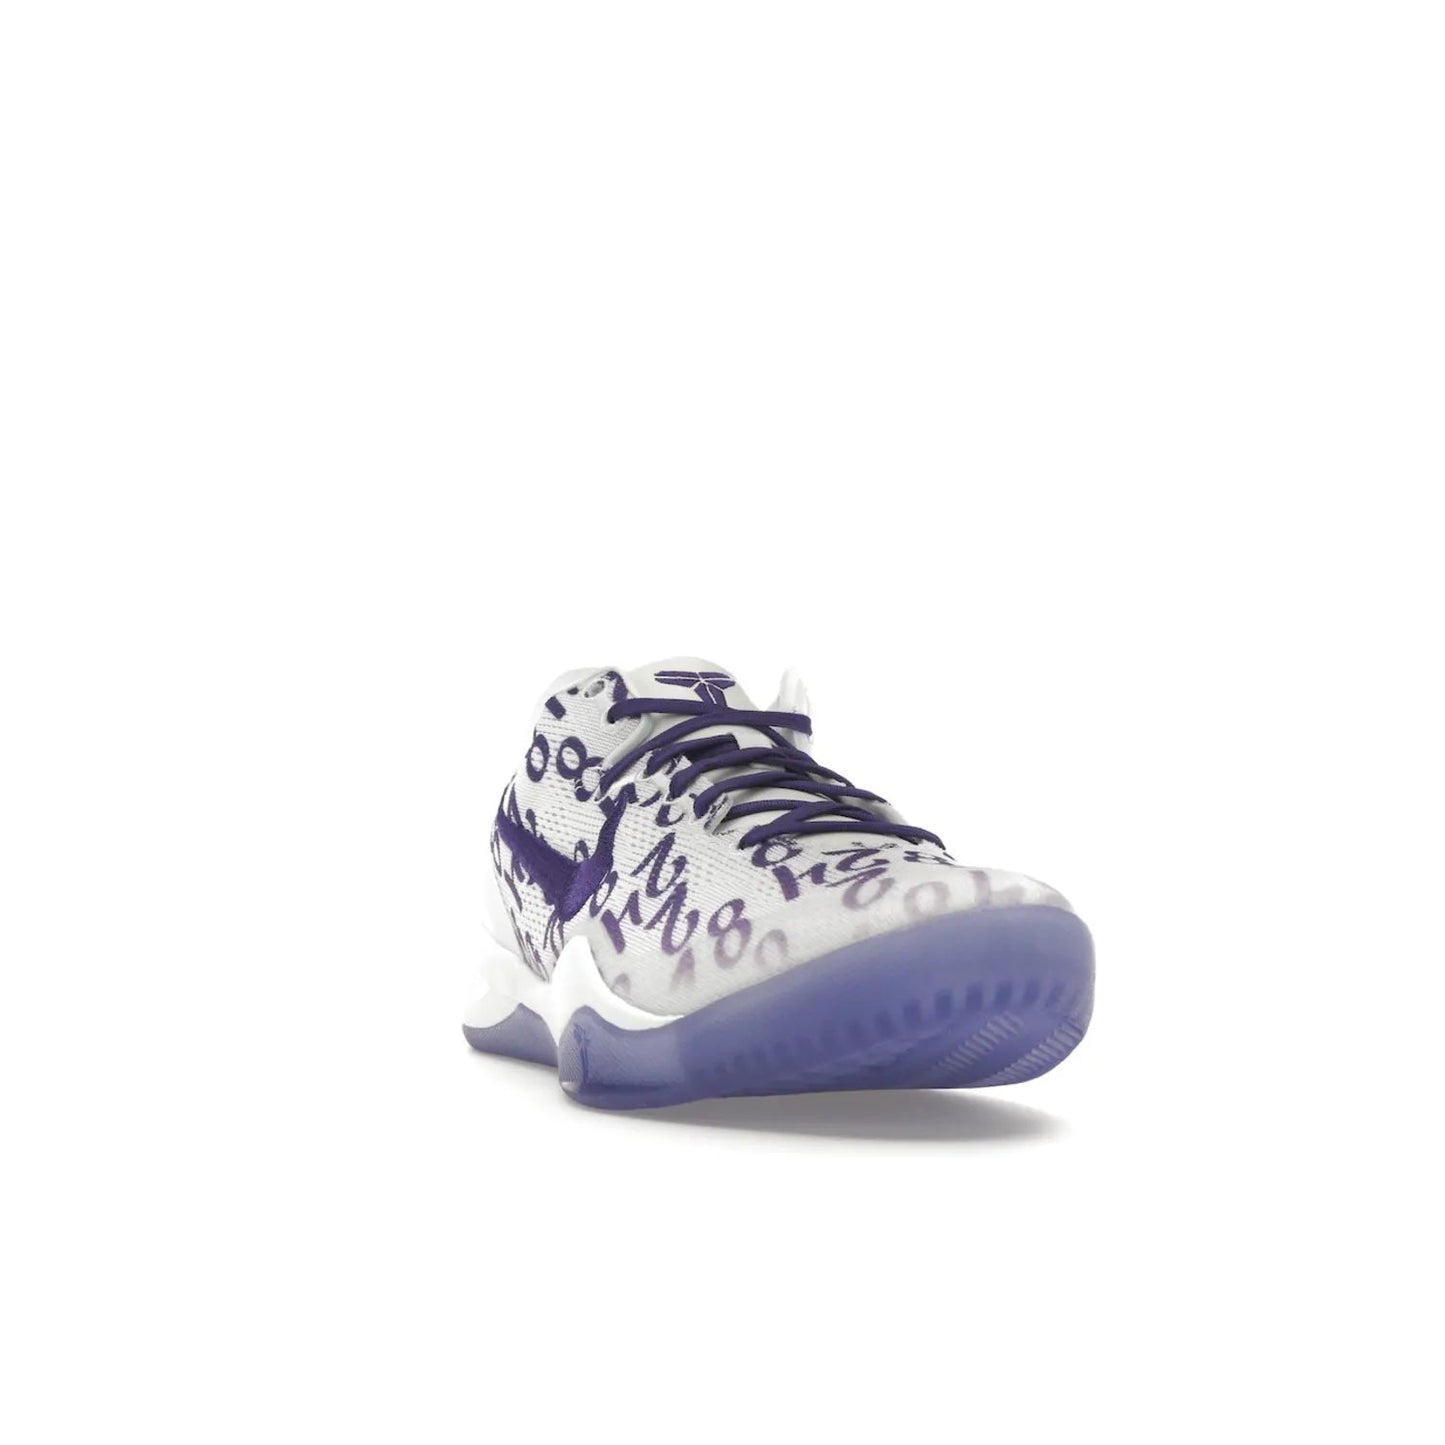 Nike Kobe 8 Protro Court Purple - Image 8 - Only at www.BallersClubKickz.com - 